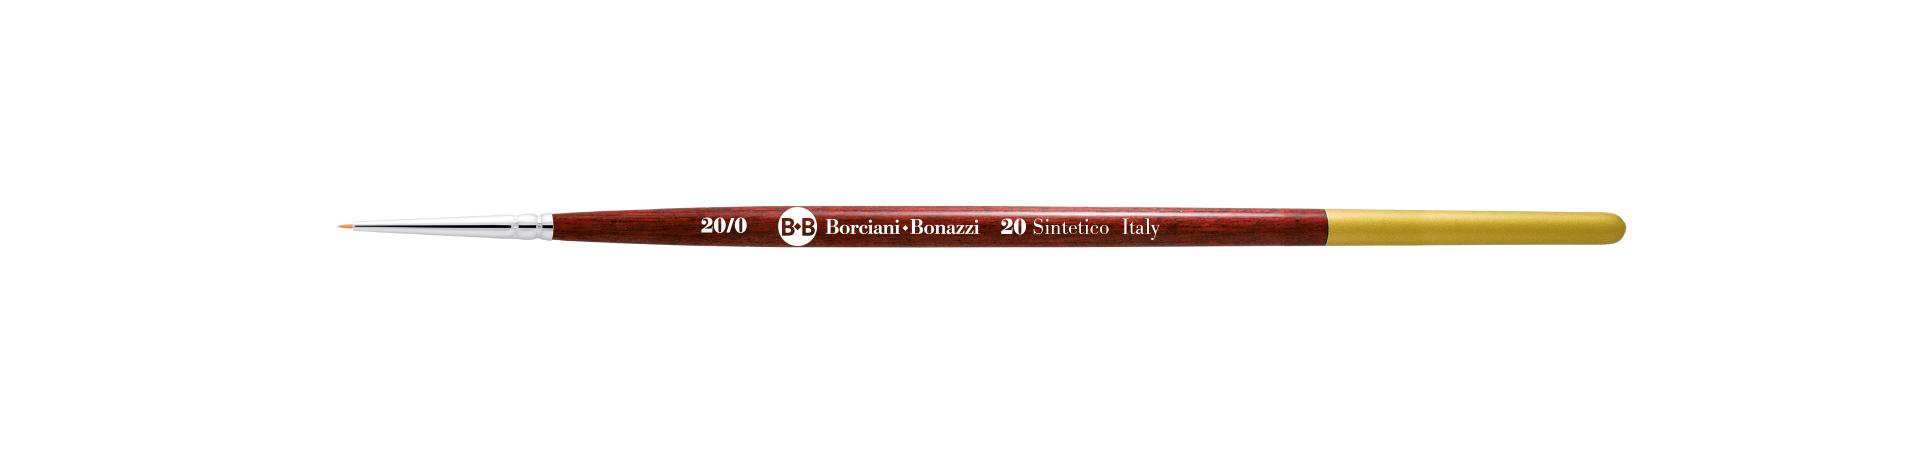 Series 20 brushes for miniatures - Borciani e Bonazzi